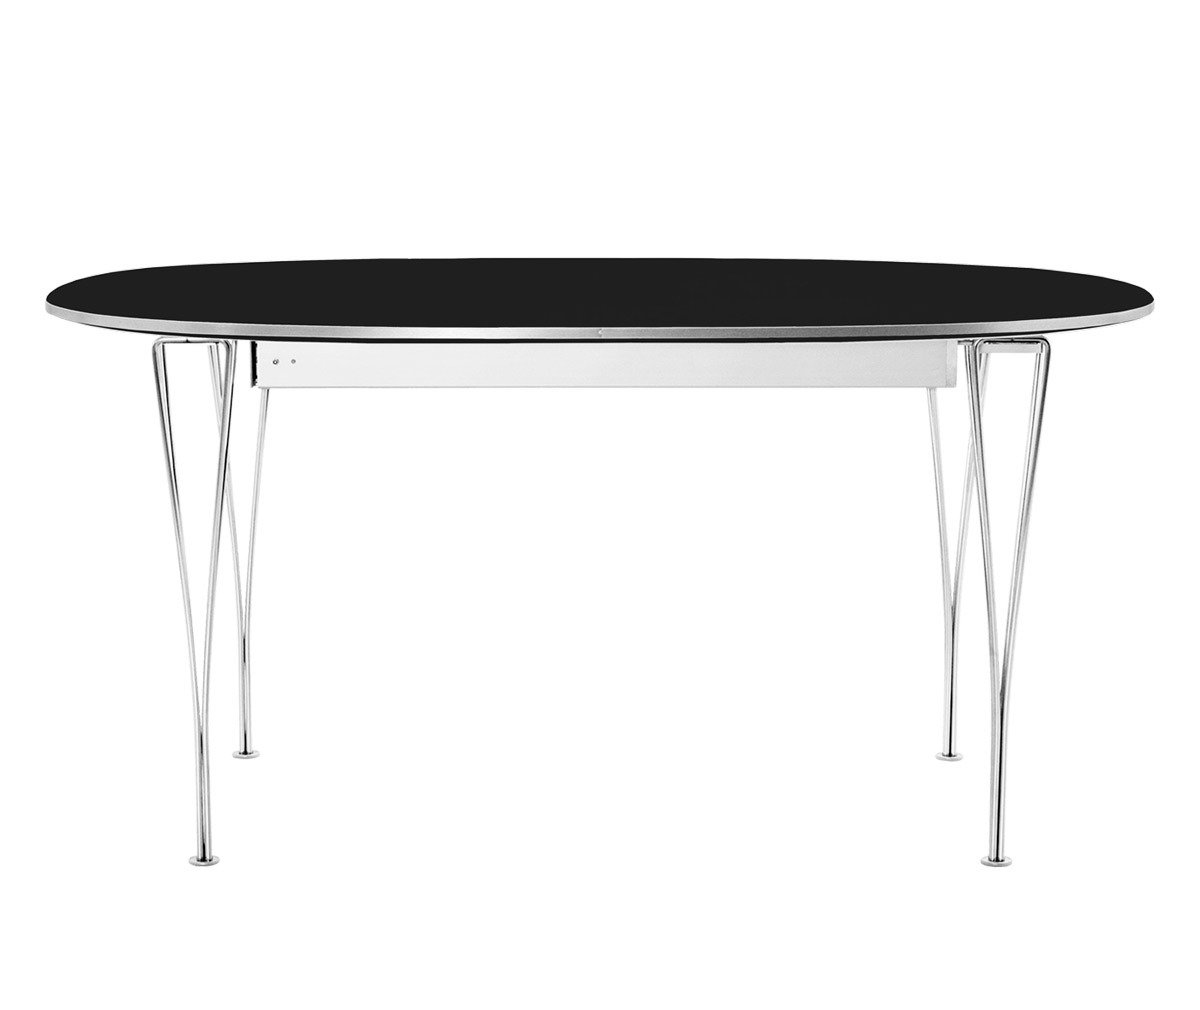 Fritz Hansen Extendable Dining Table B620, “Superellipse” Black/Chrome, 100 x 170/270 cm